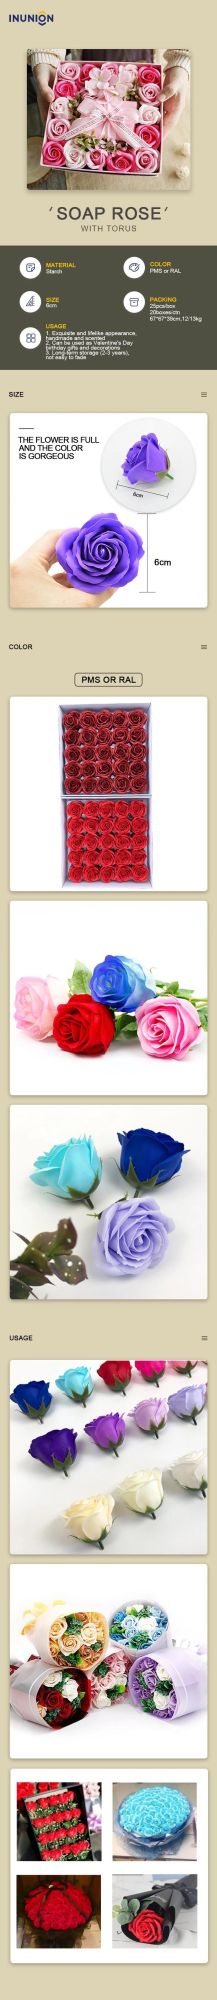 Soap Flower Artificial Flower Gift Valentine′s Day Mother′s Day Eternal Flower Soap Rose 6cm Gift Box